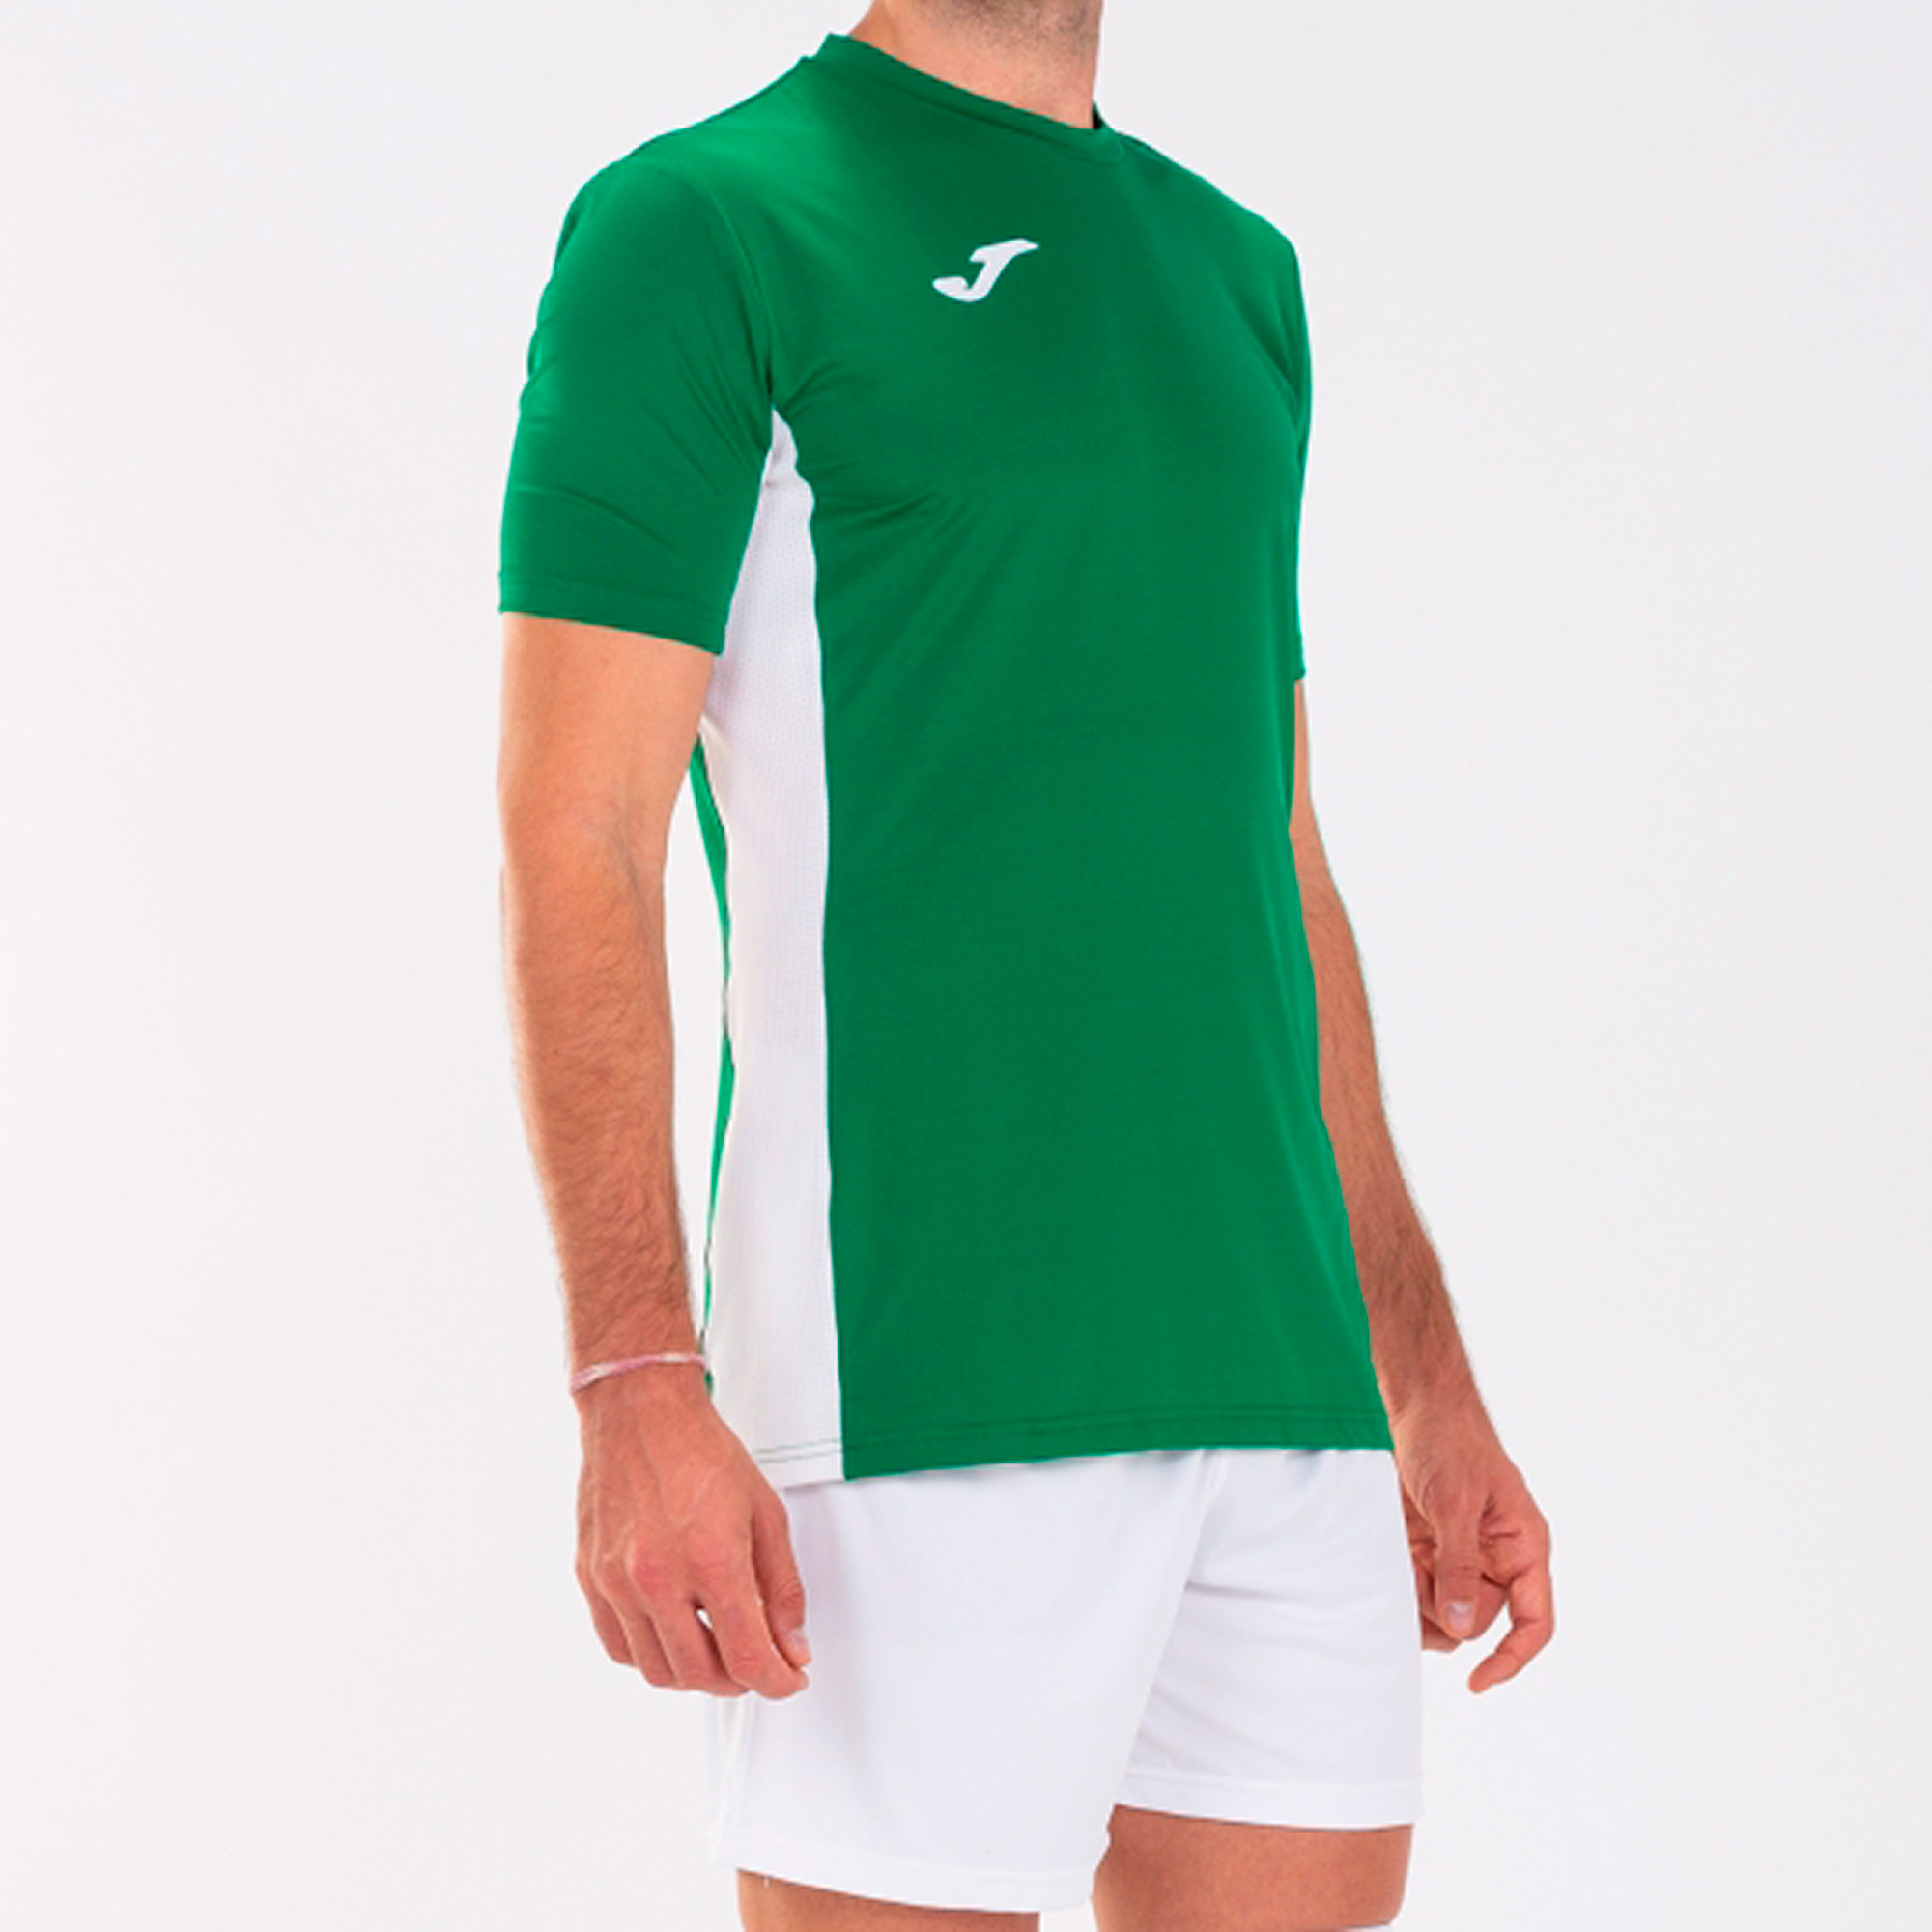 T-shirt Manga Curta Joma Superliga Verde Branco